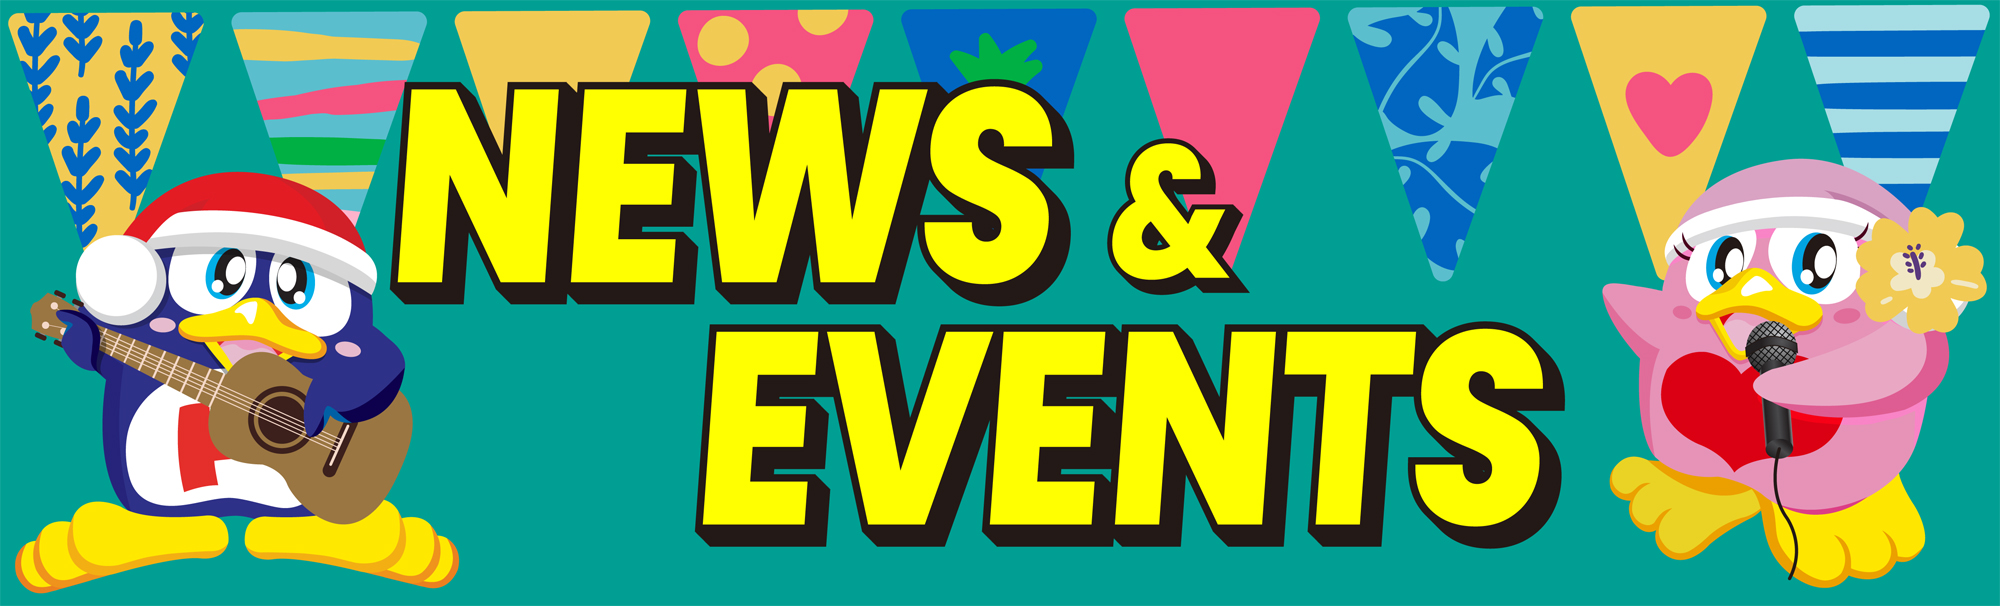 News & Events - News